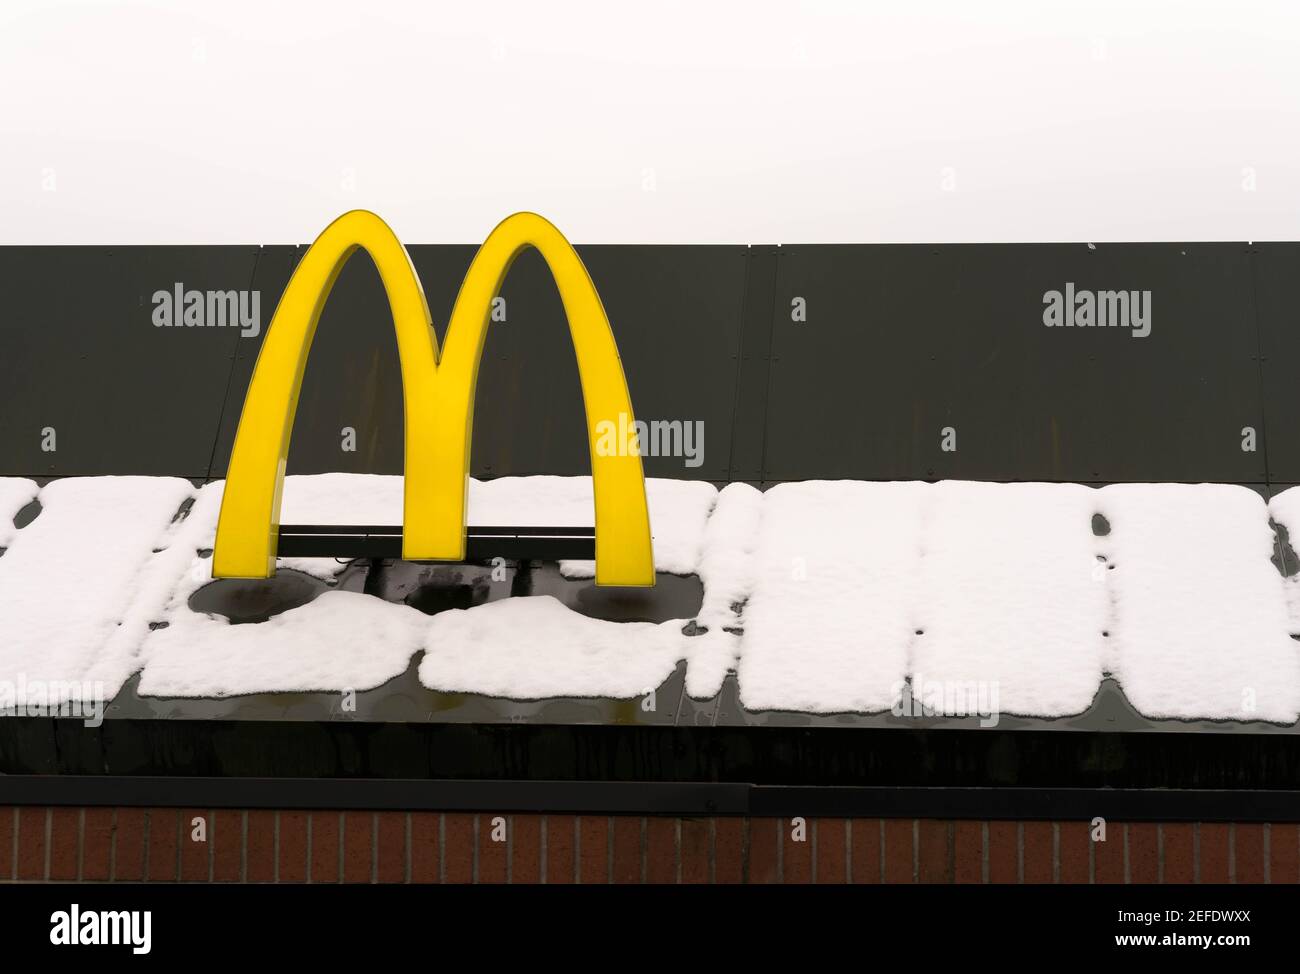 McDonalds M logo in yellow erected on tiled roof covered in white snow Sevenoaks Kent England Stock Photo